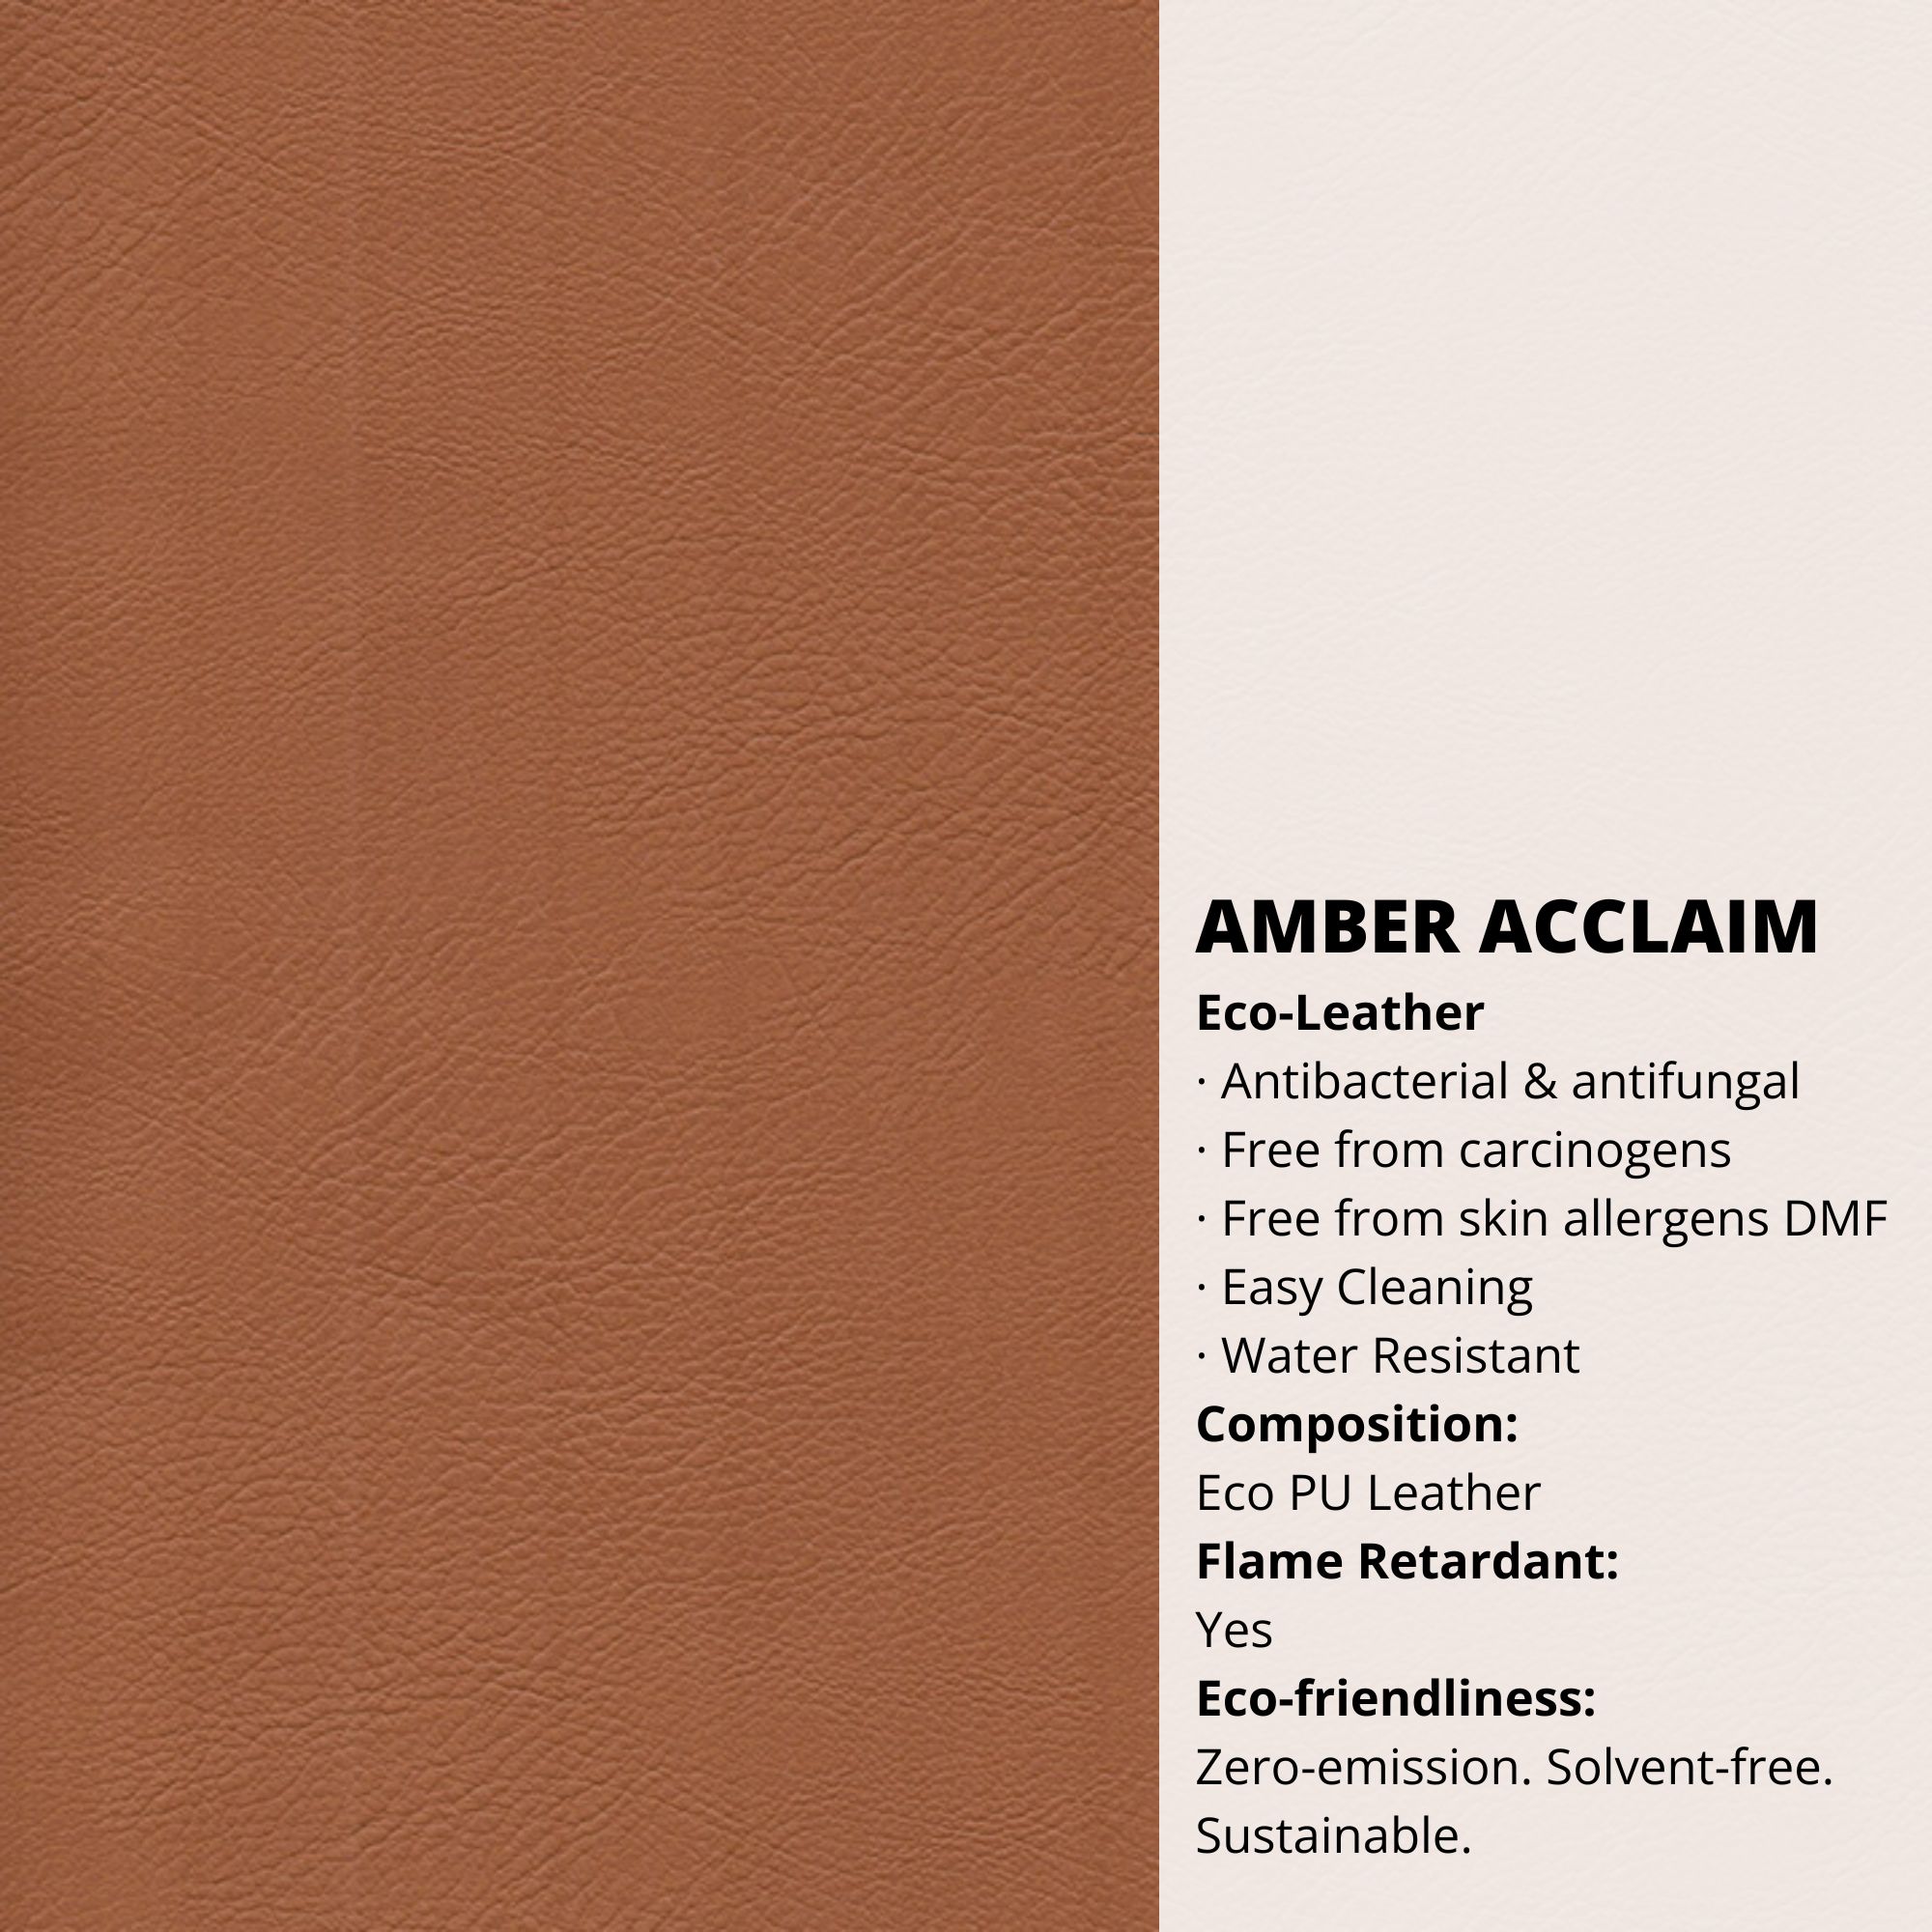 Amber Acclaim